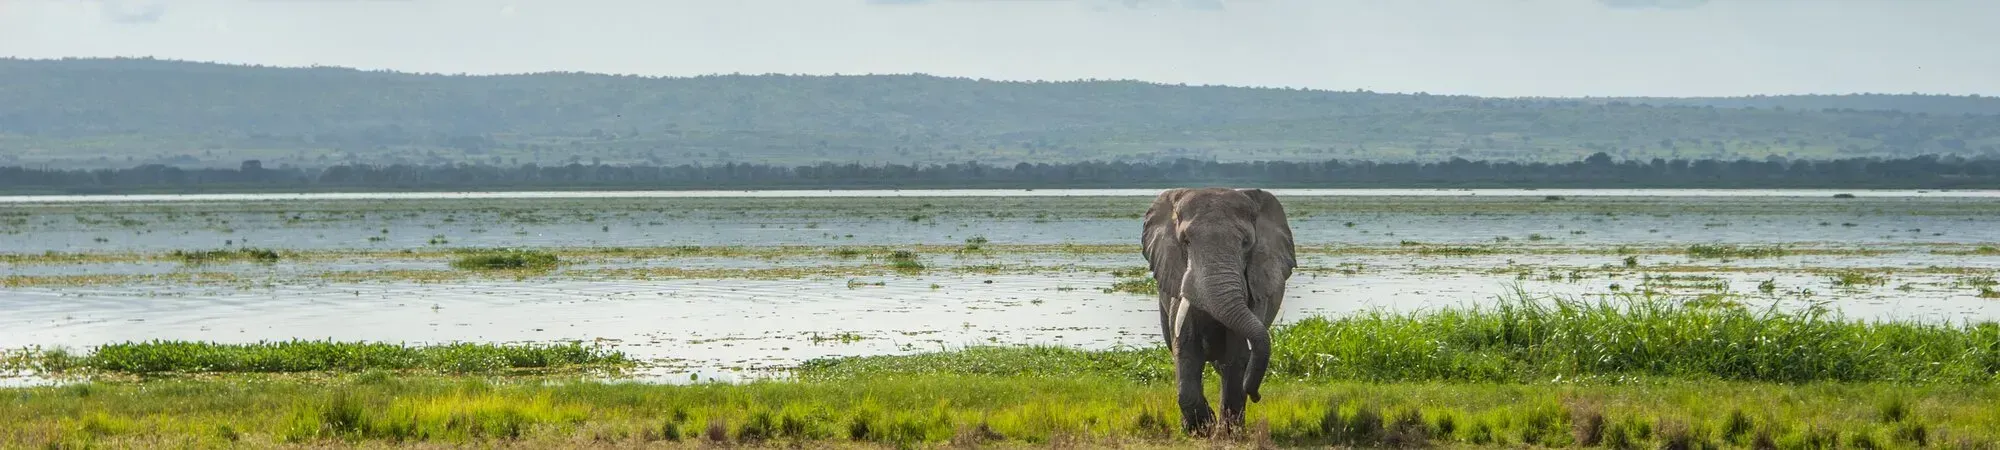 Bull elephant on lake albert, Uganda